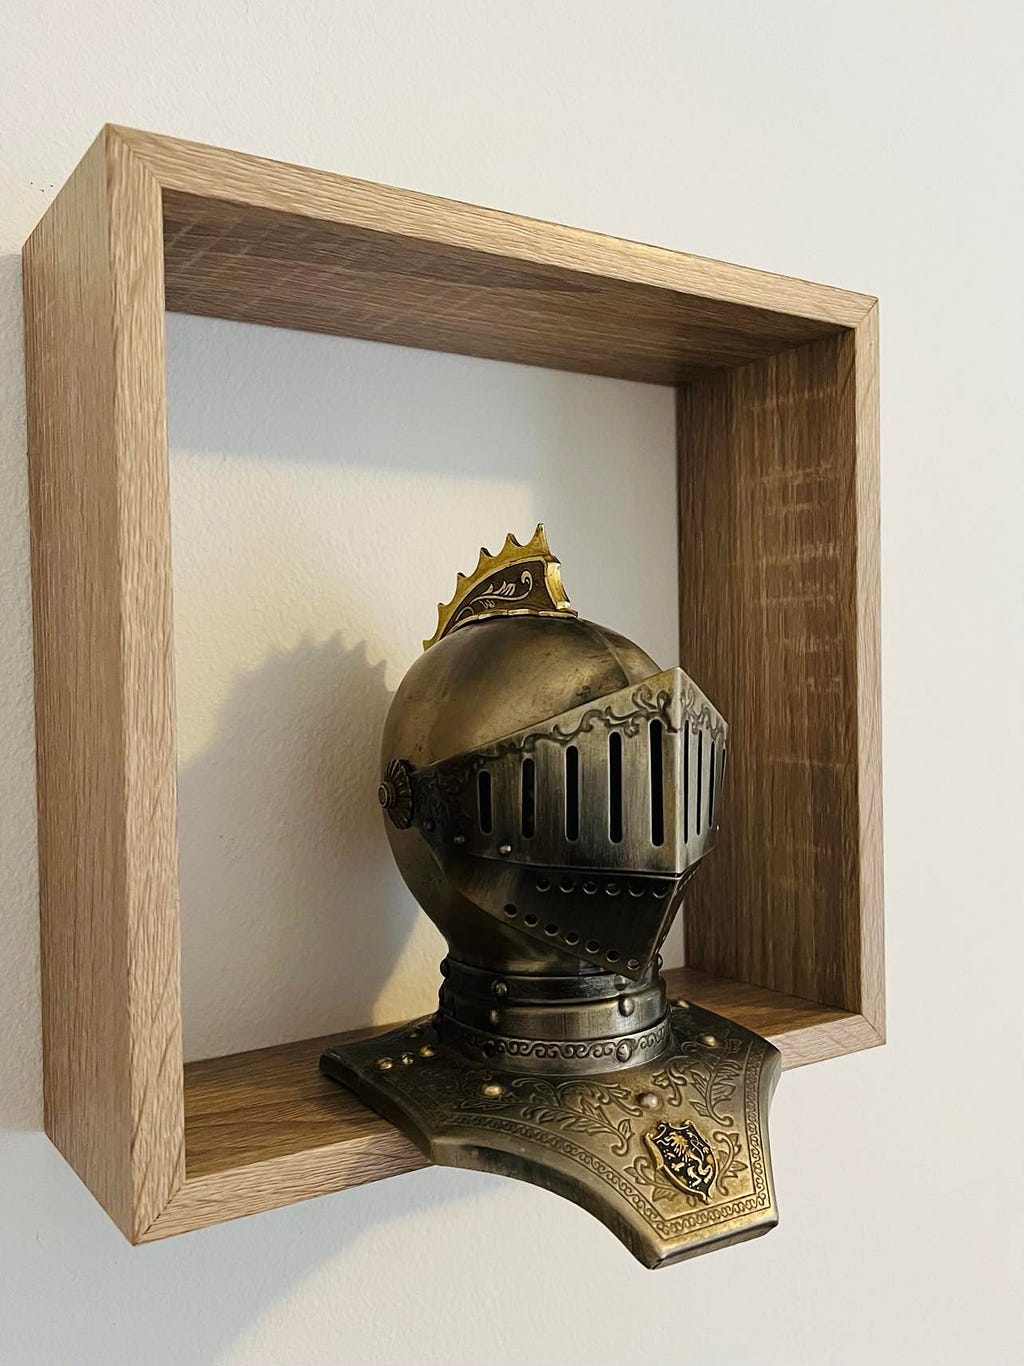 A miniature knight’s helmet on a shelf